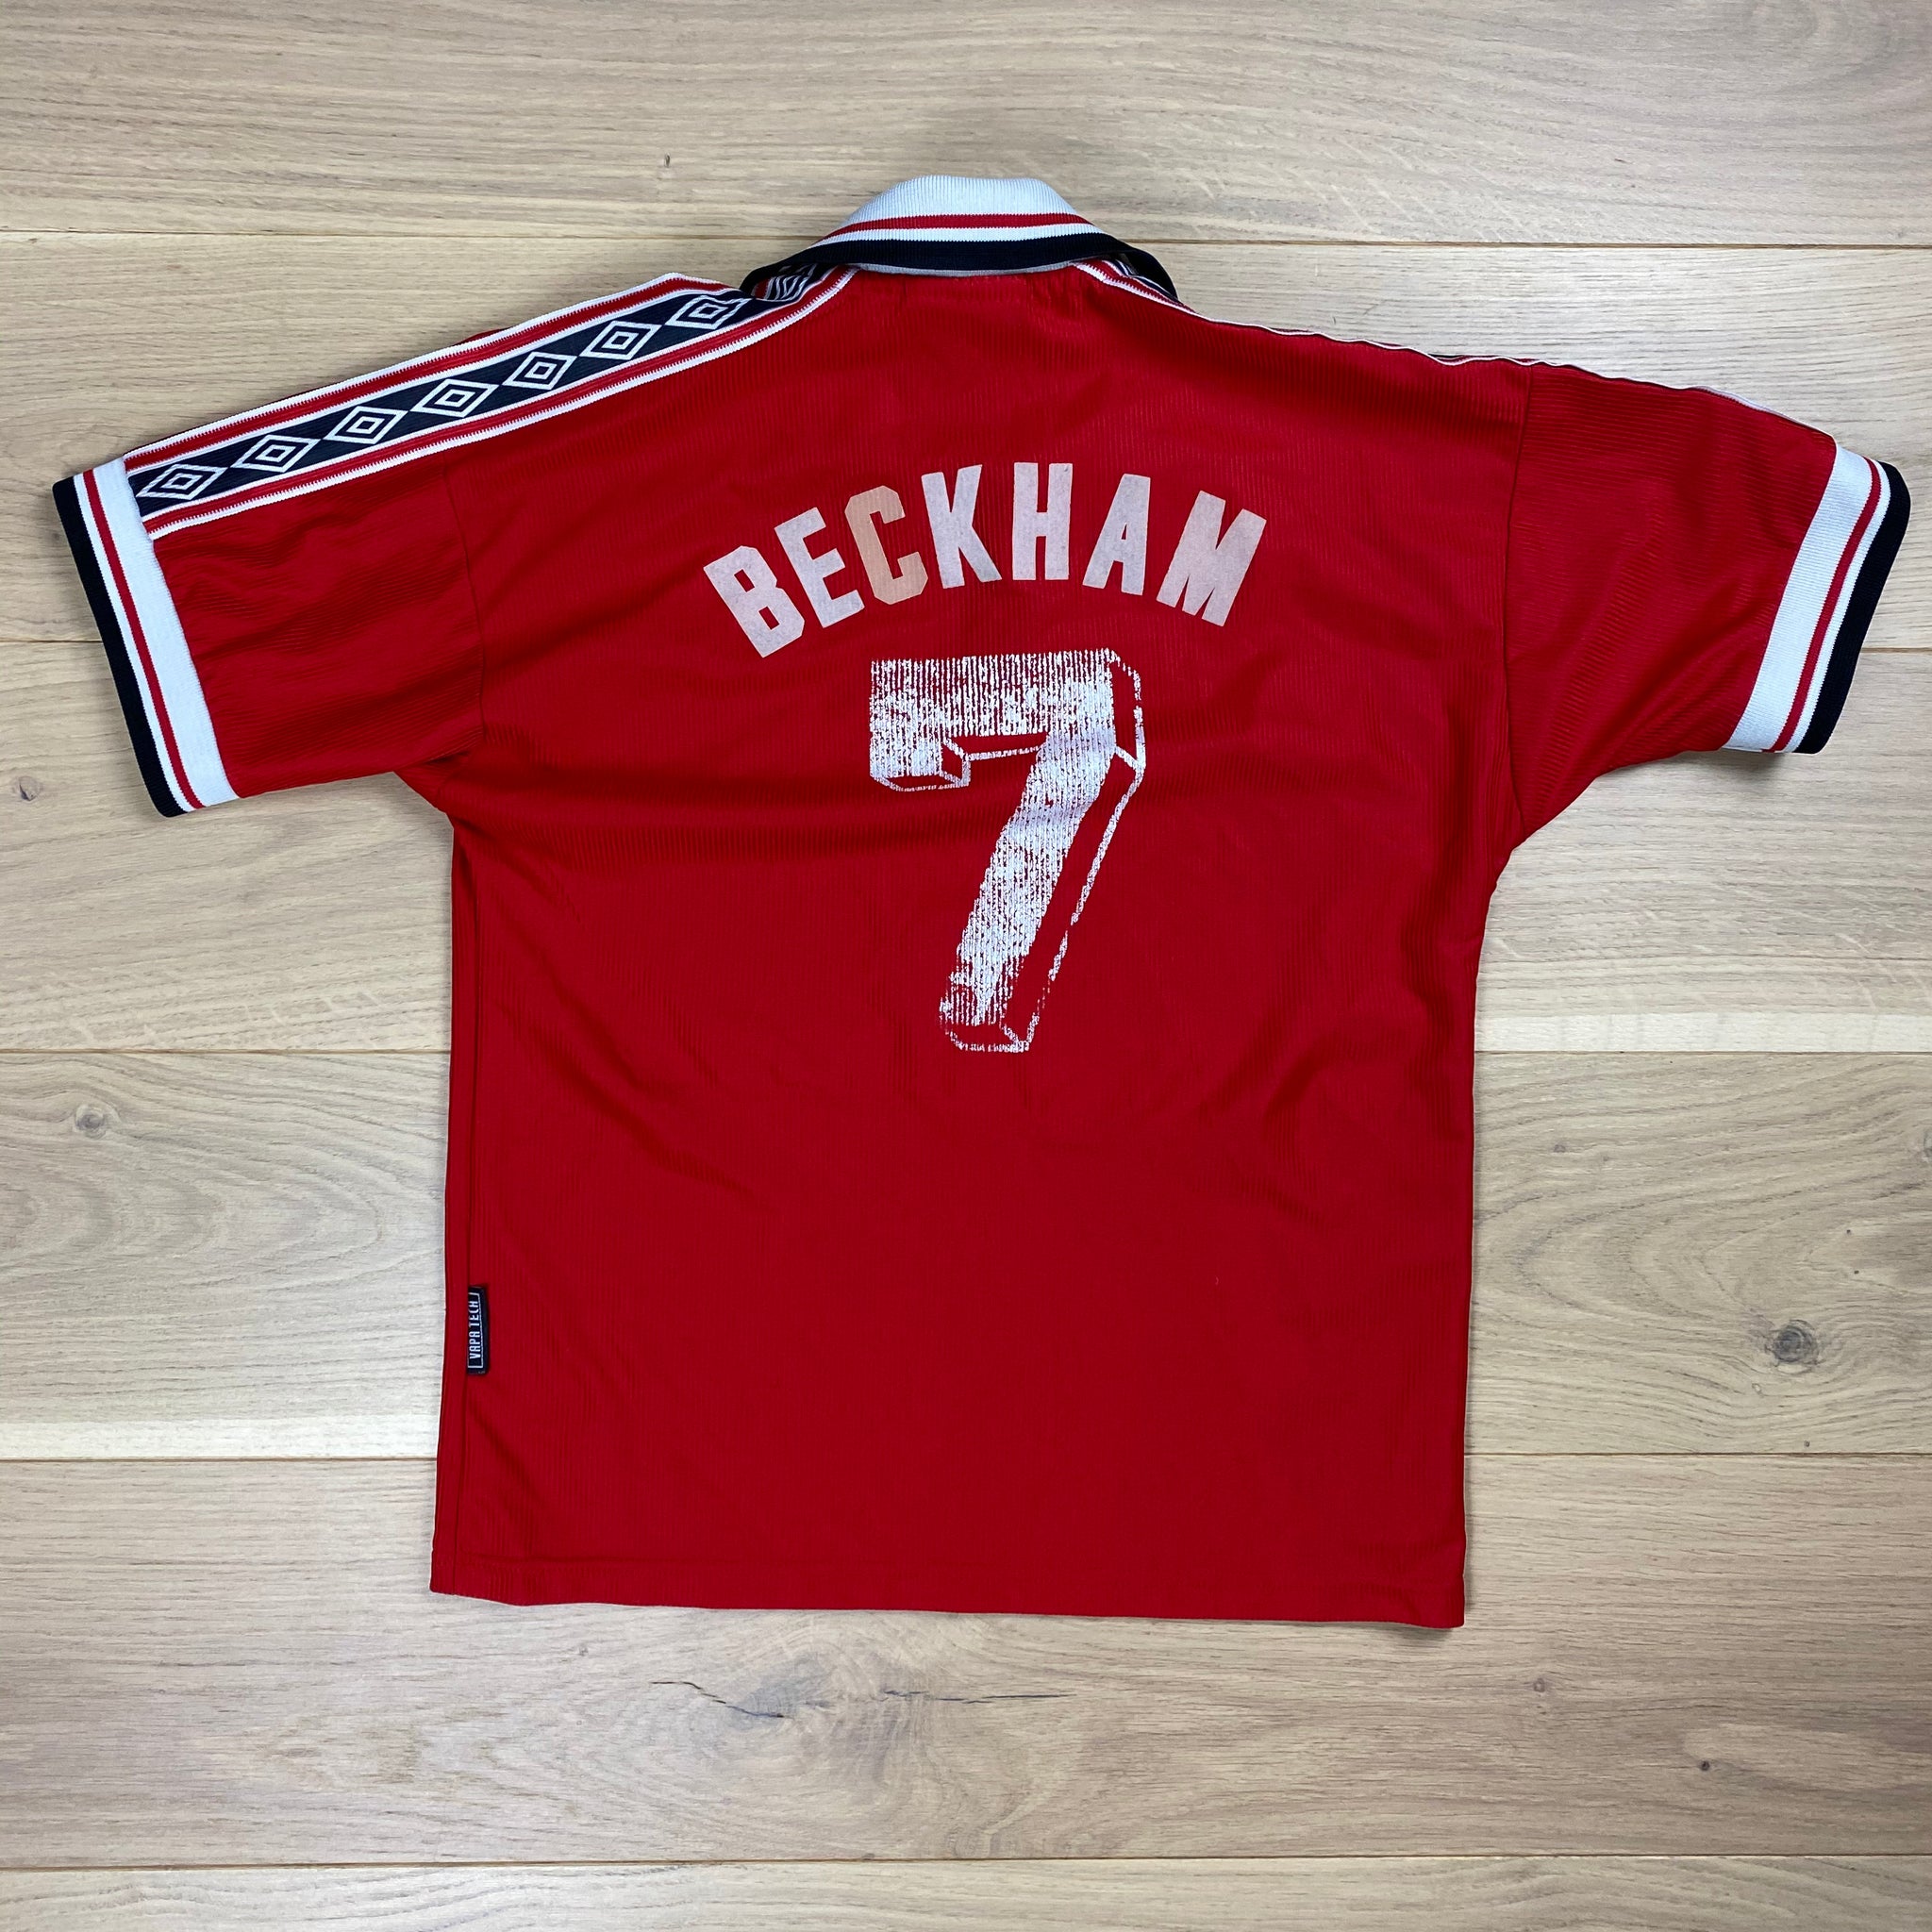 vintage beckham jersey